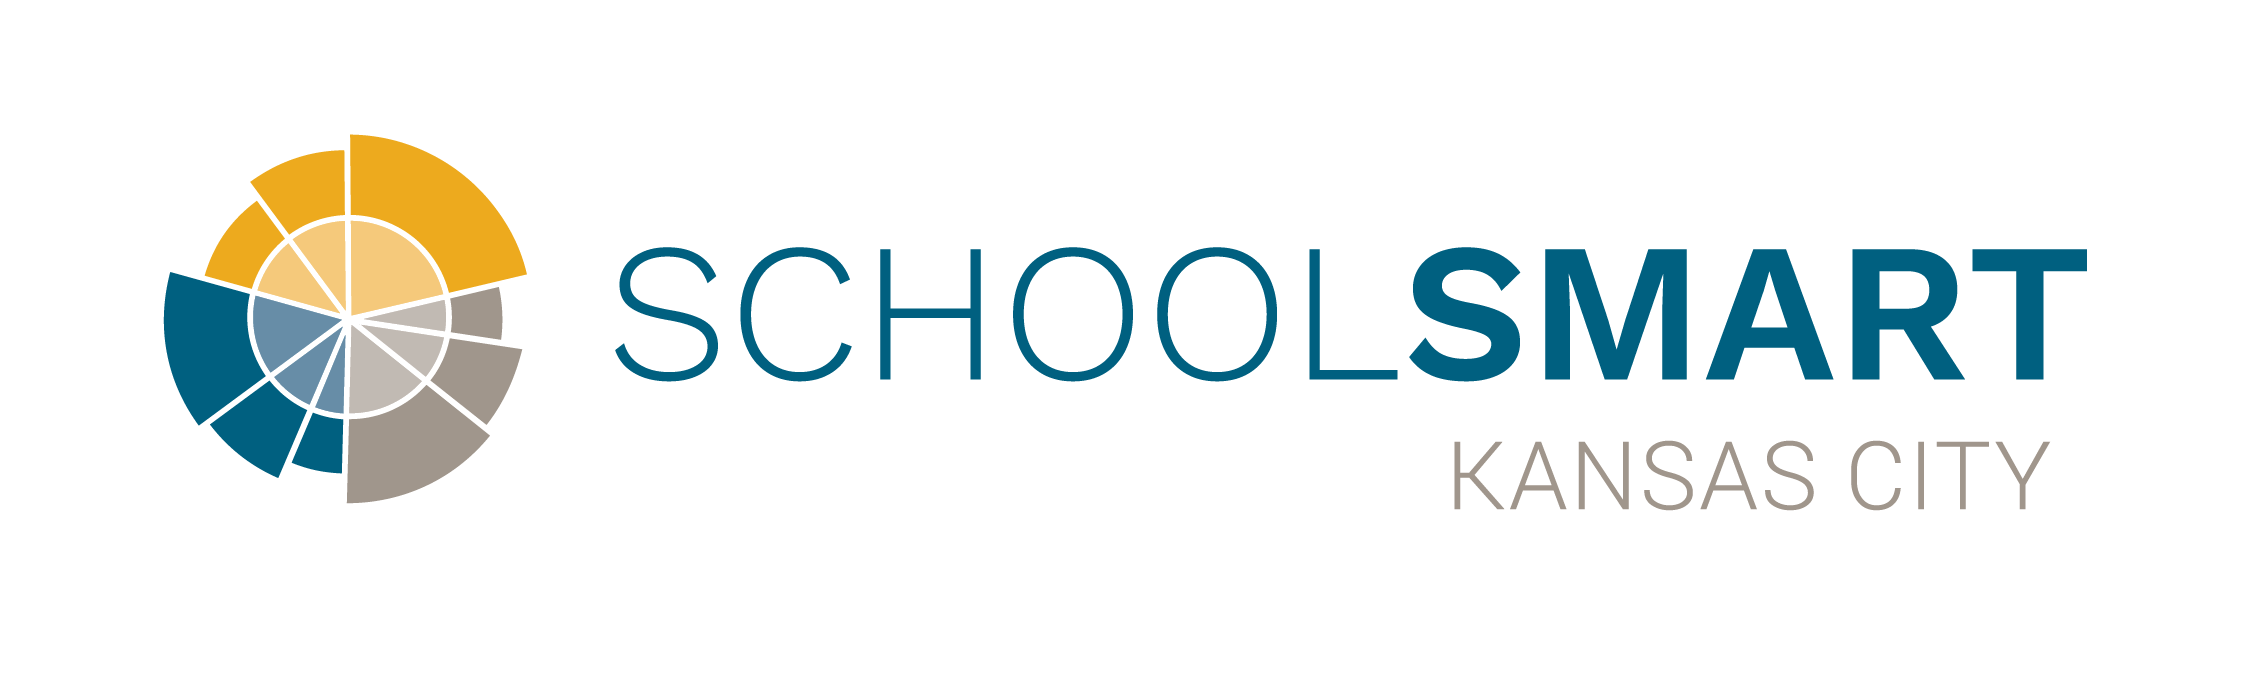 School Smart Logo - SchoolSmart Kansas City | SchoolSmartKC | School Smart Kansas City